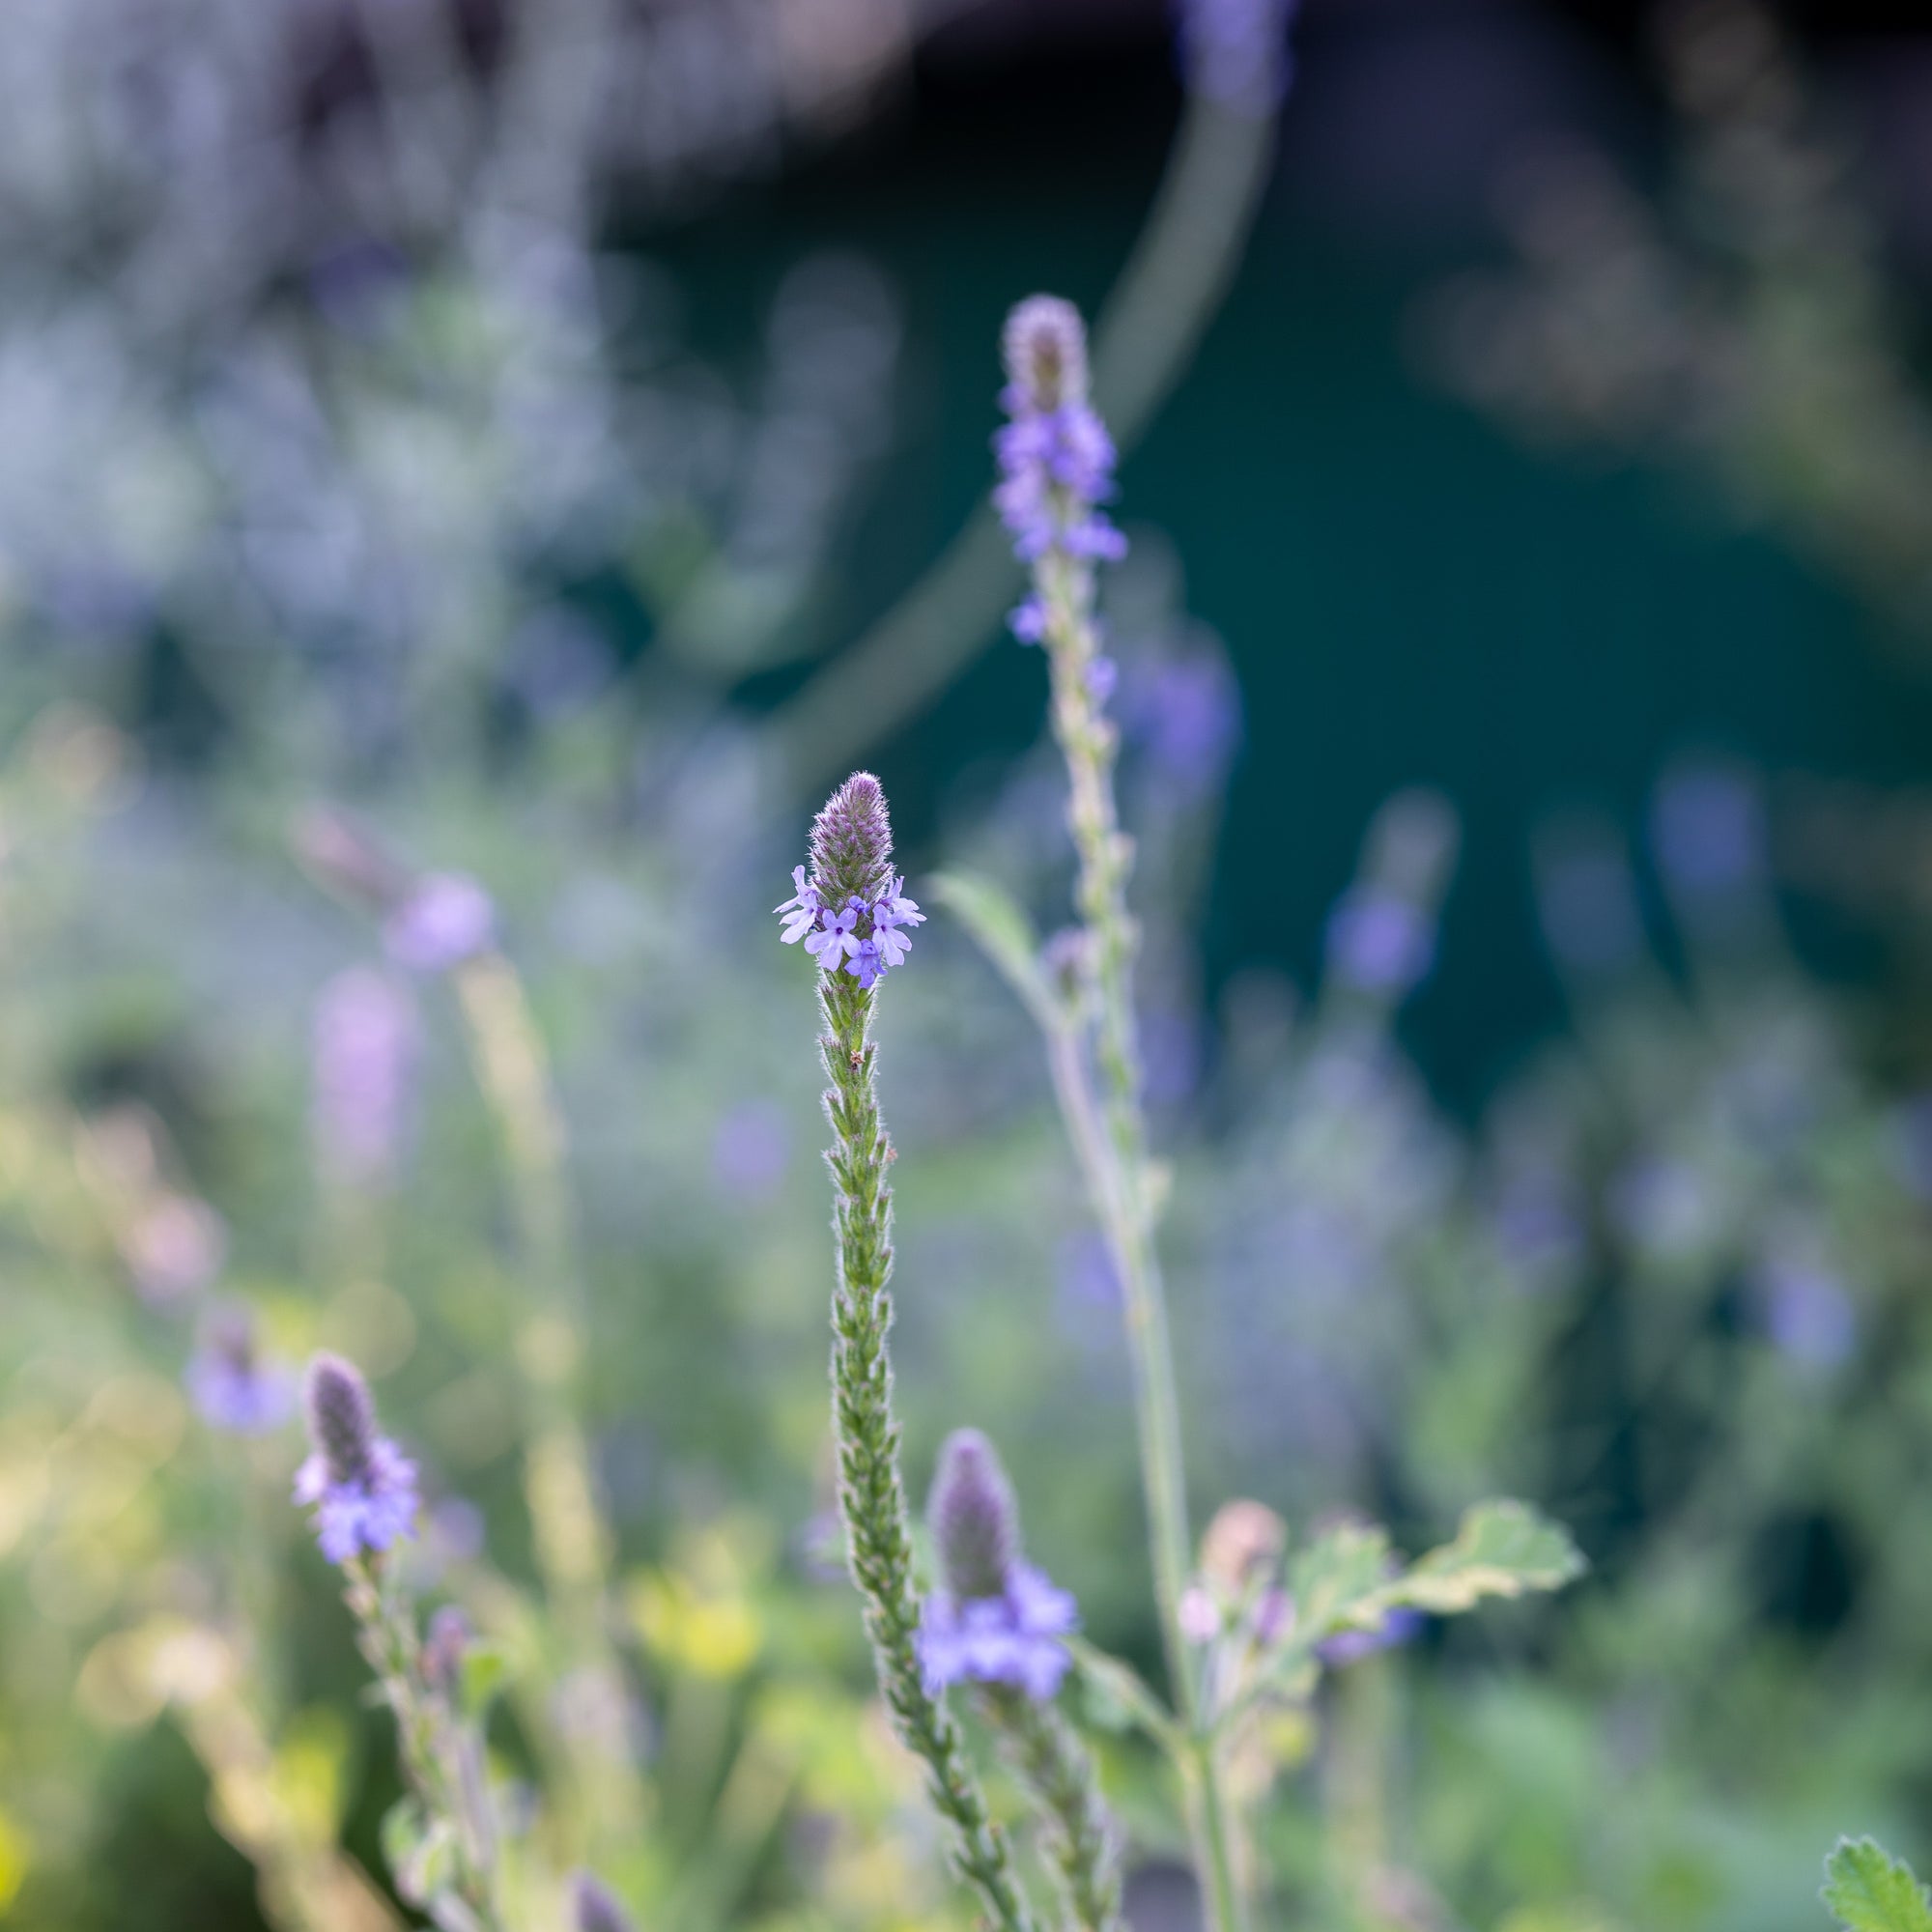 Western Vervain (Verbena lasiostachys) in flower / purple mint family perennial